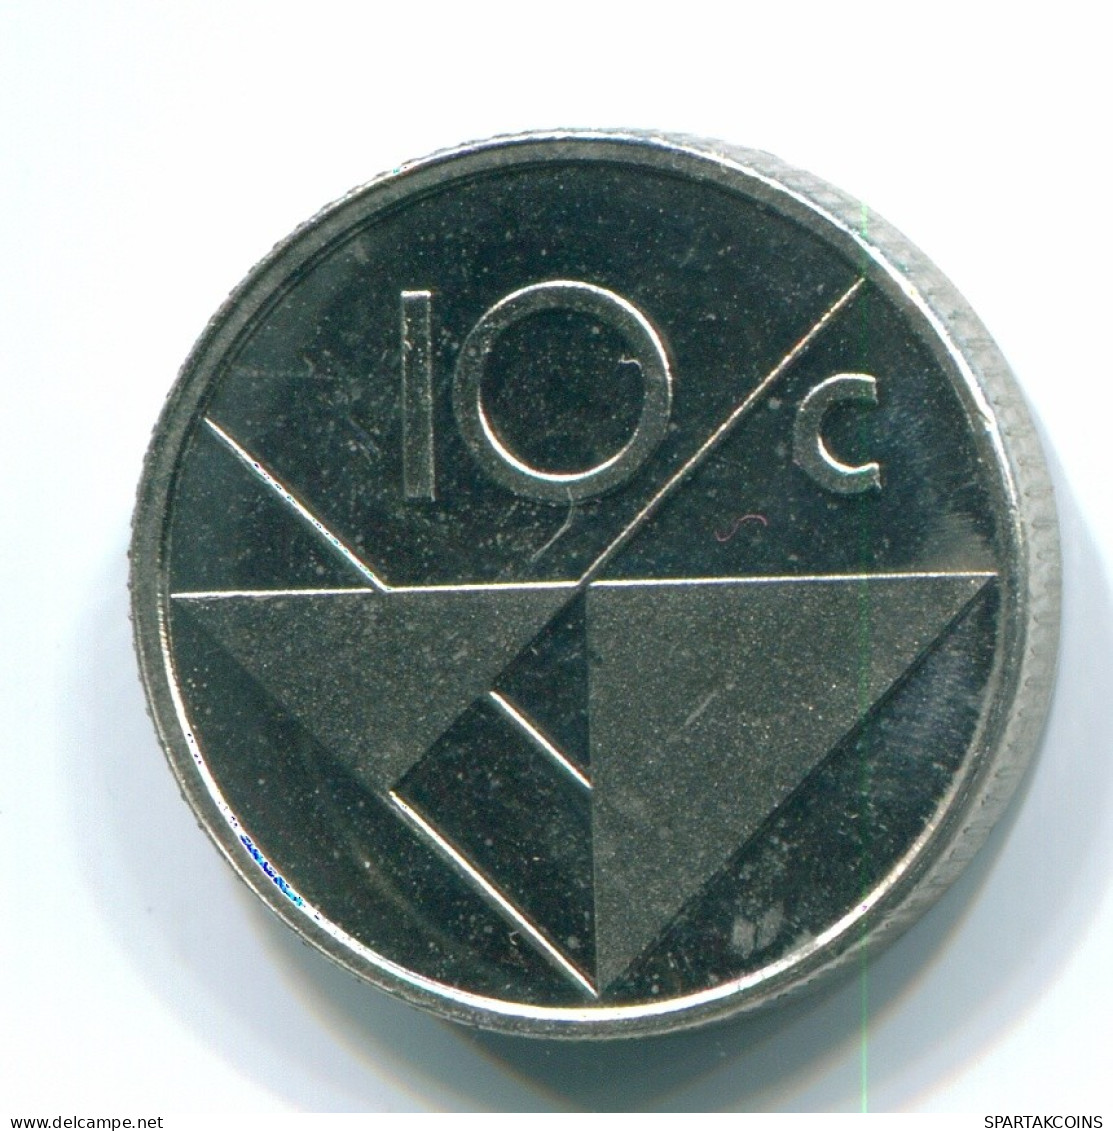 10 CENTS 1990 ARUBA (Netherlands) Nickel Colonial Coin #S13627.U.A - Aruba